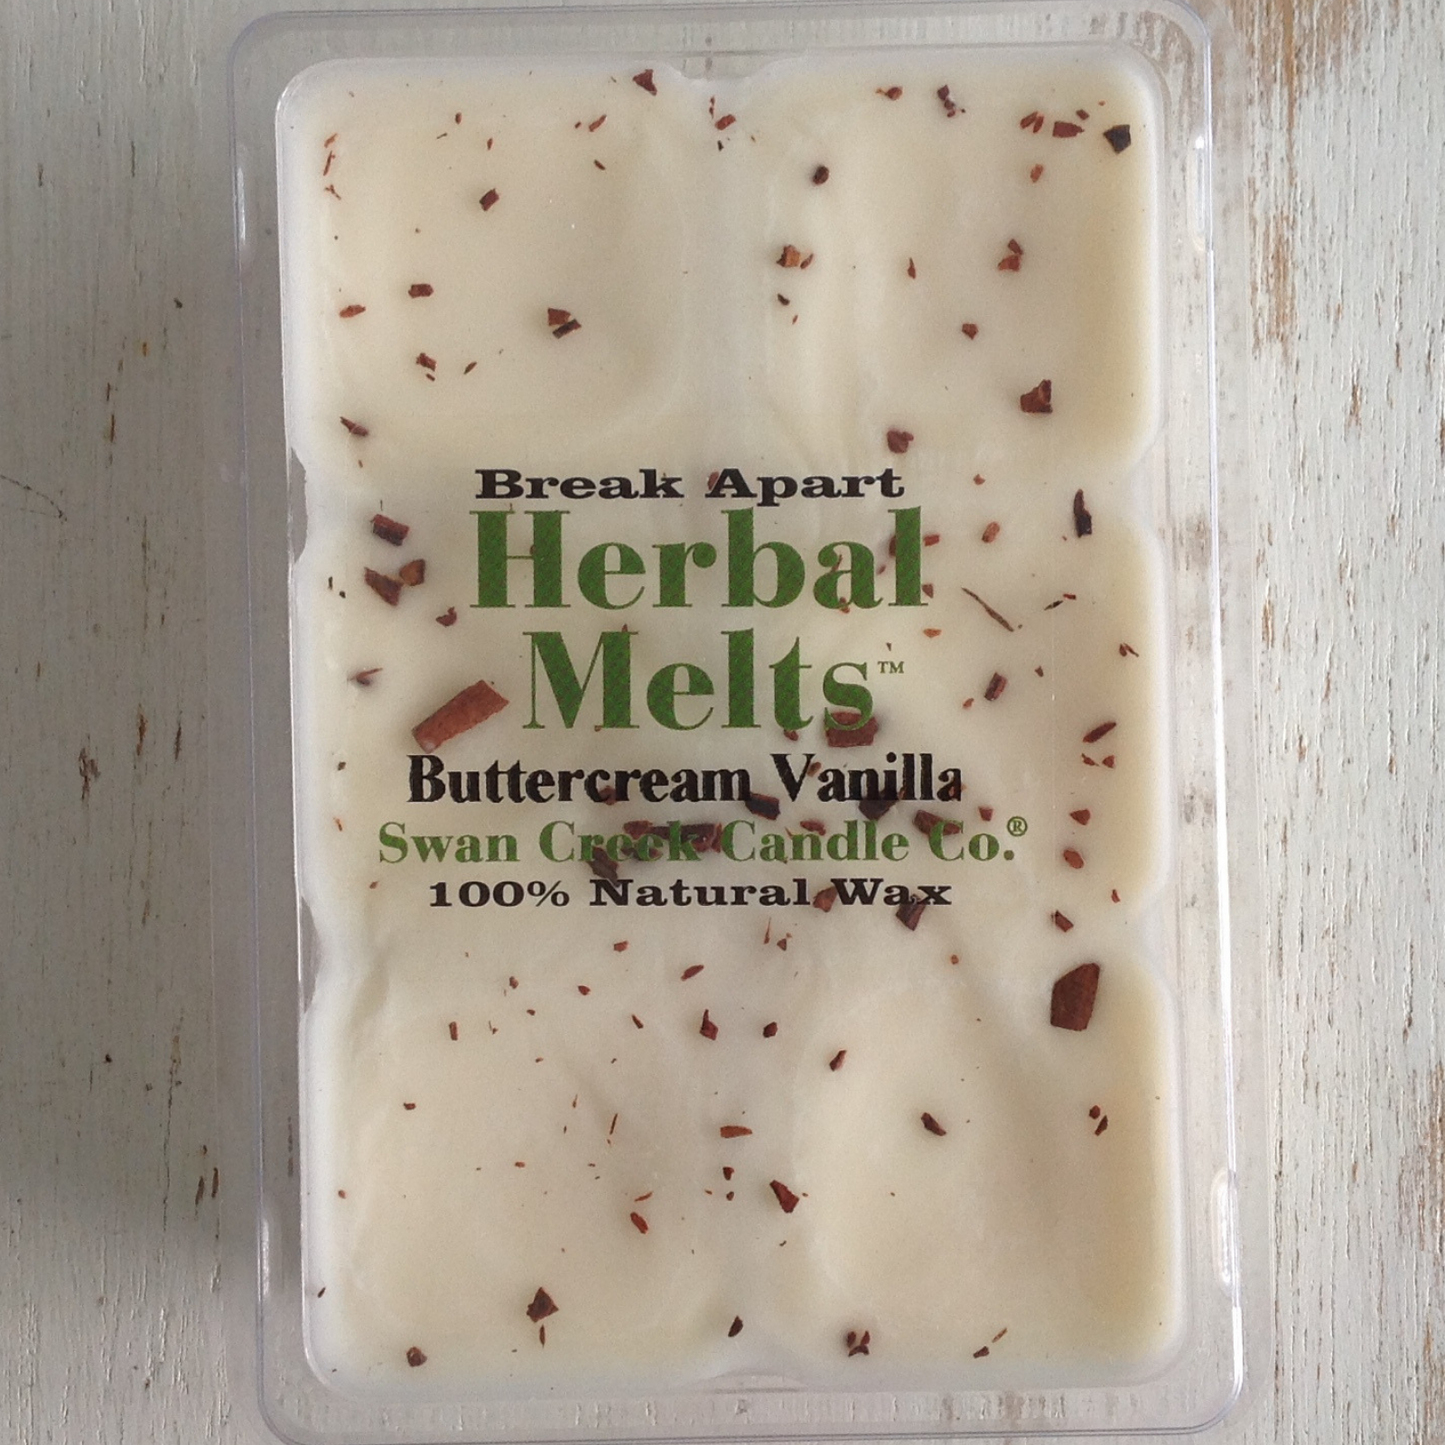 Buttercream Vanilla Herbal Melts